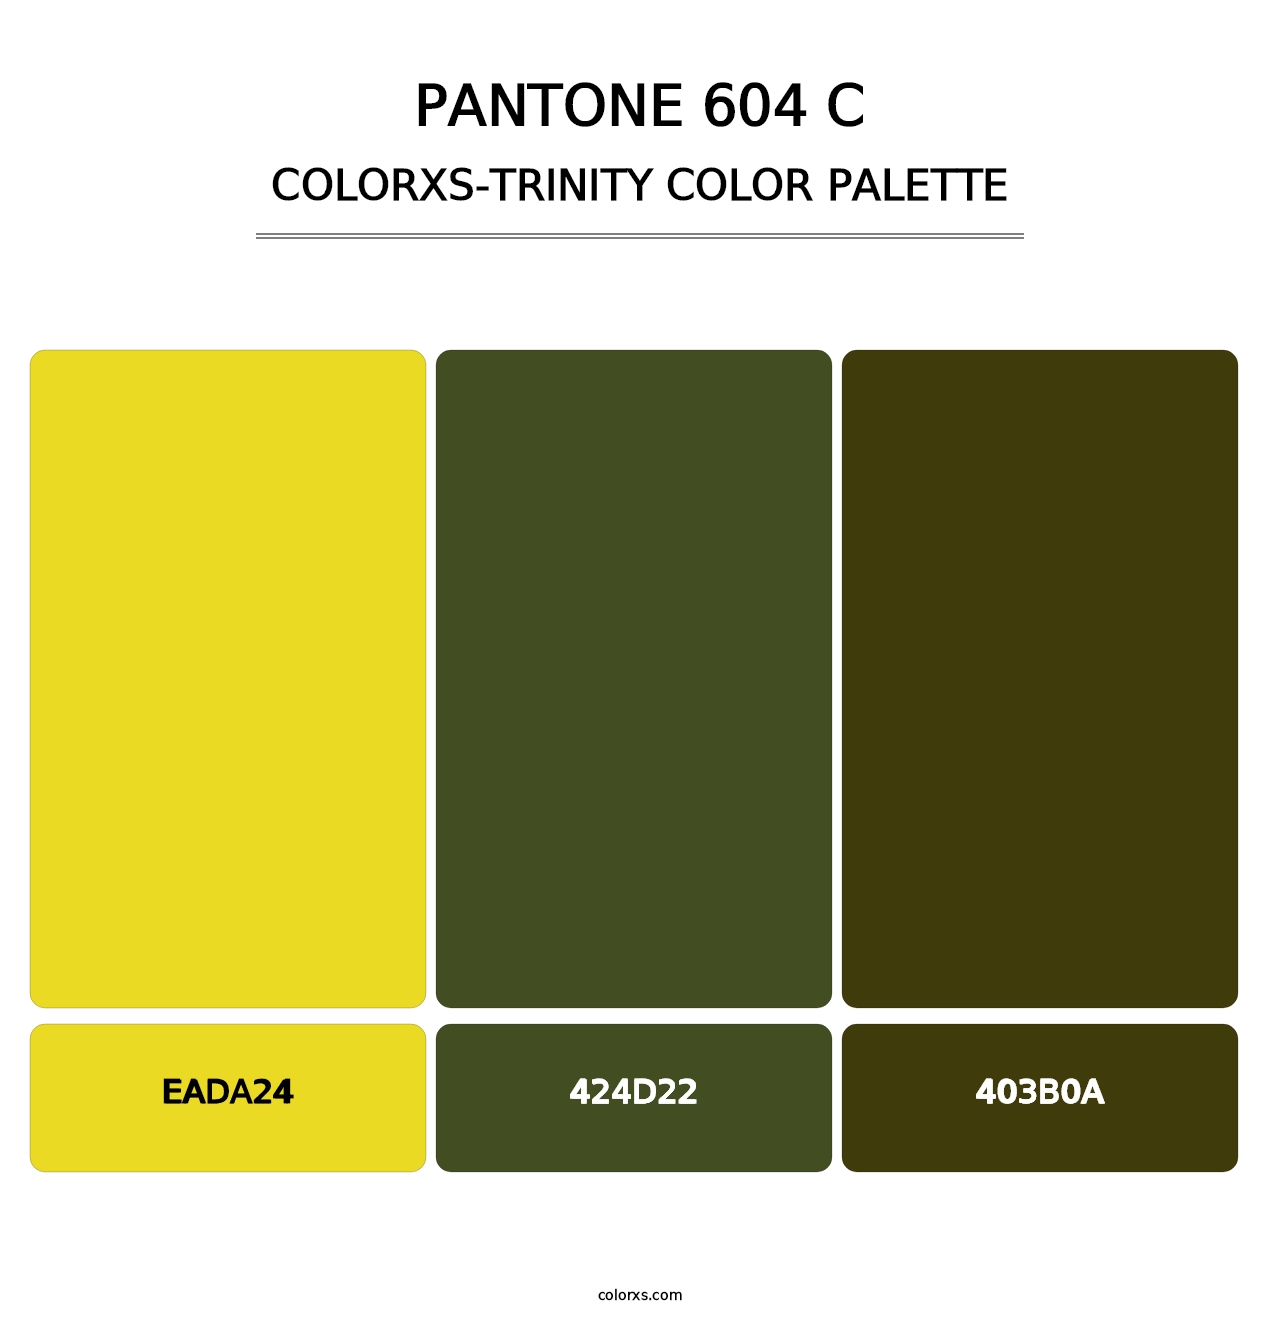 PANTONE 604 C - Colorxs Trinity Palette